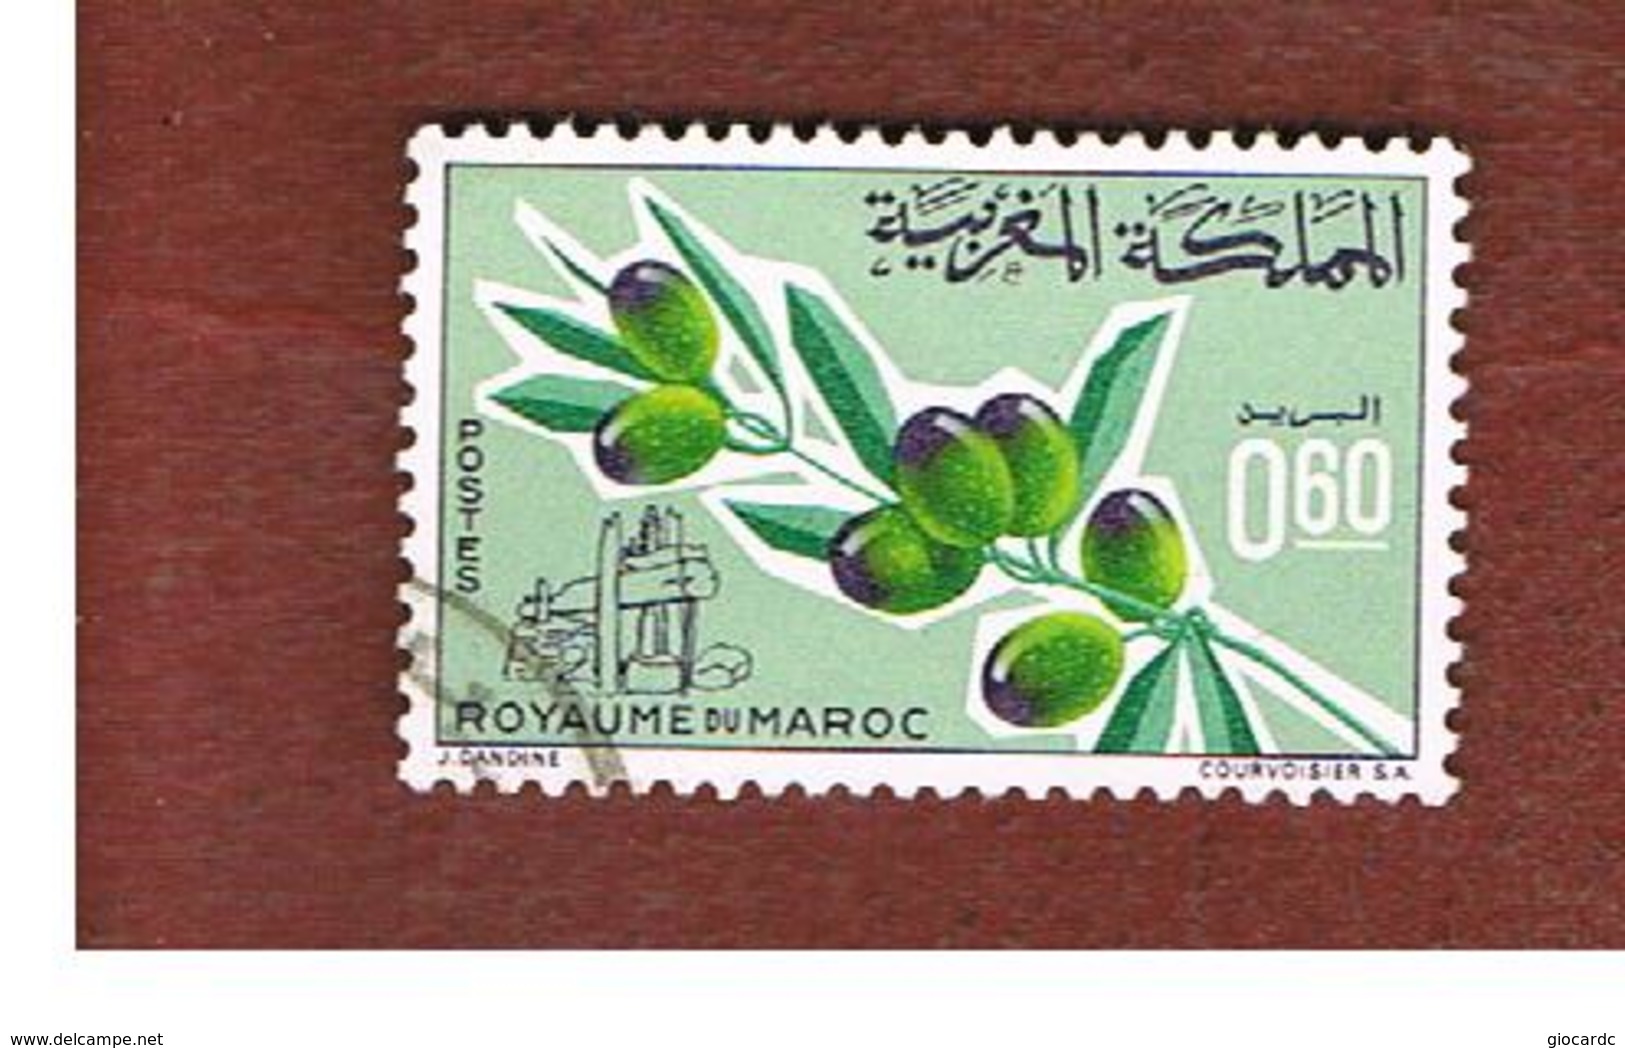 MAROCCO (MOROCCO)  -  SG 189  -   1966 OLIVES - USED ° - Marocco (1956-...)